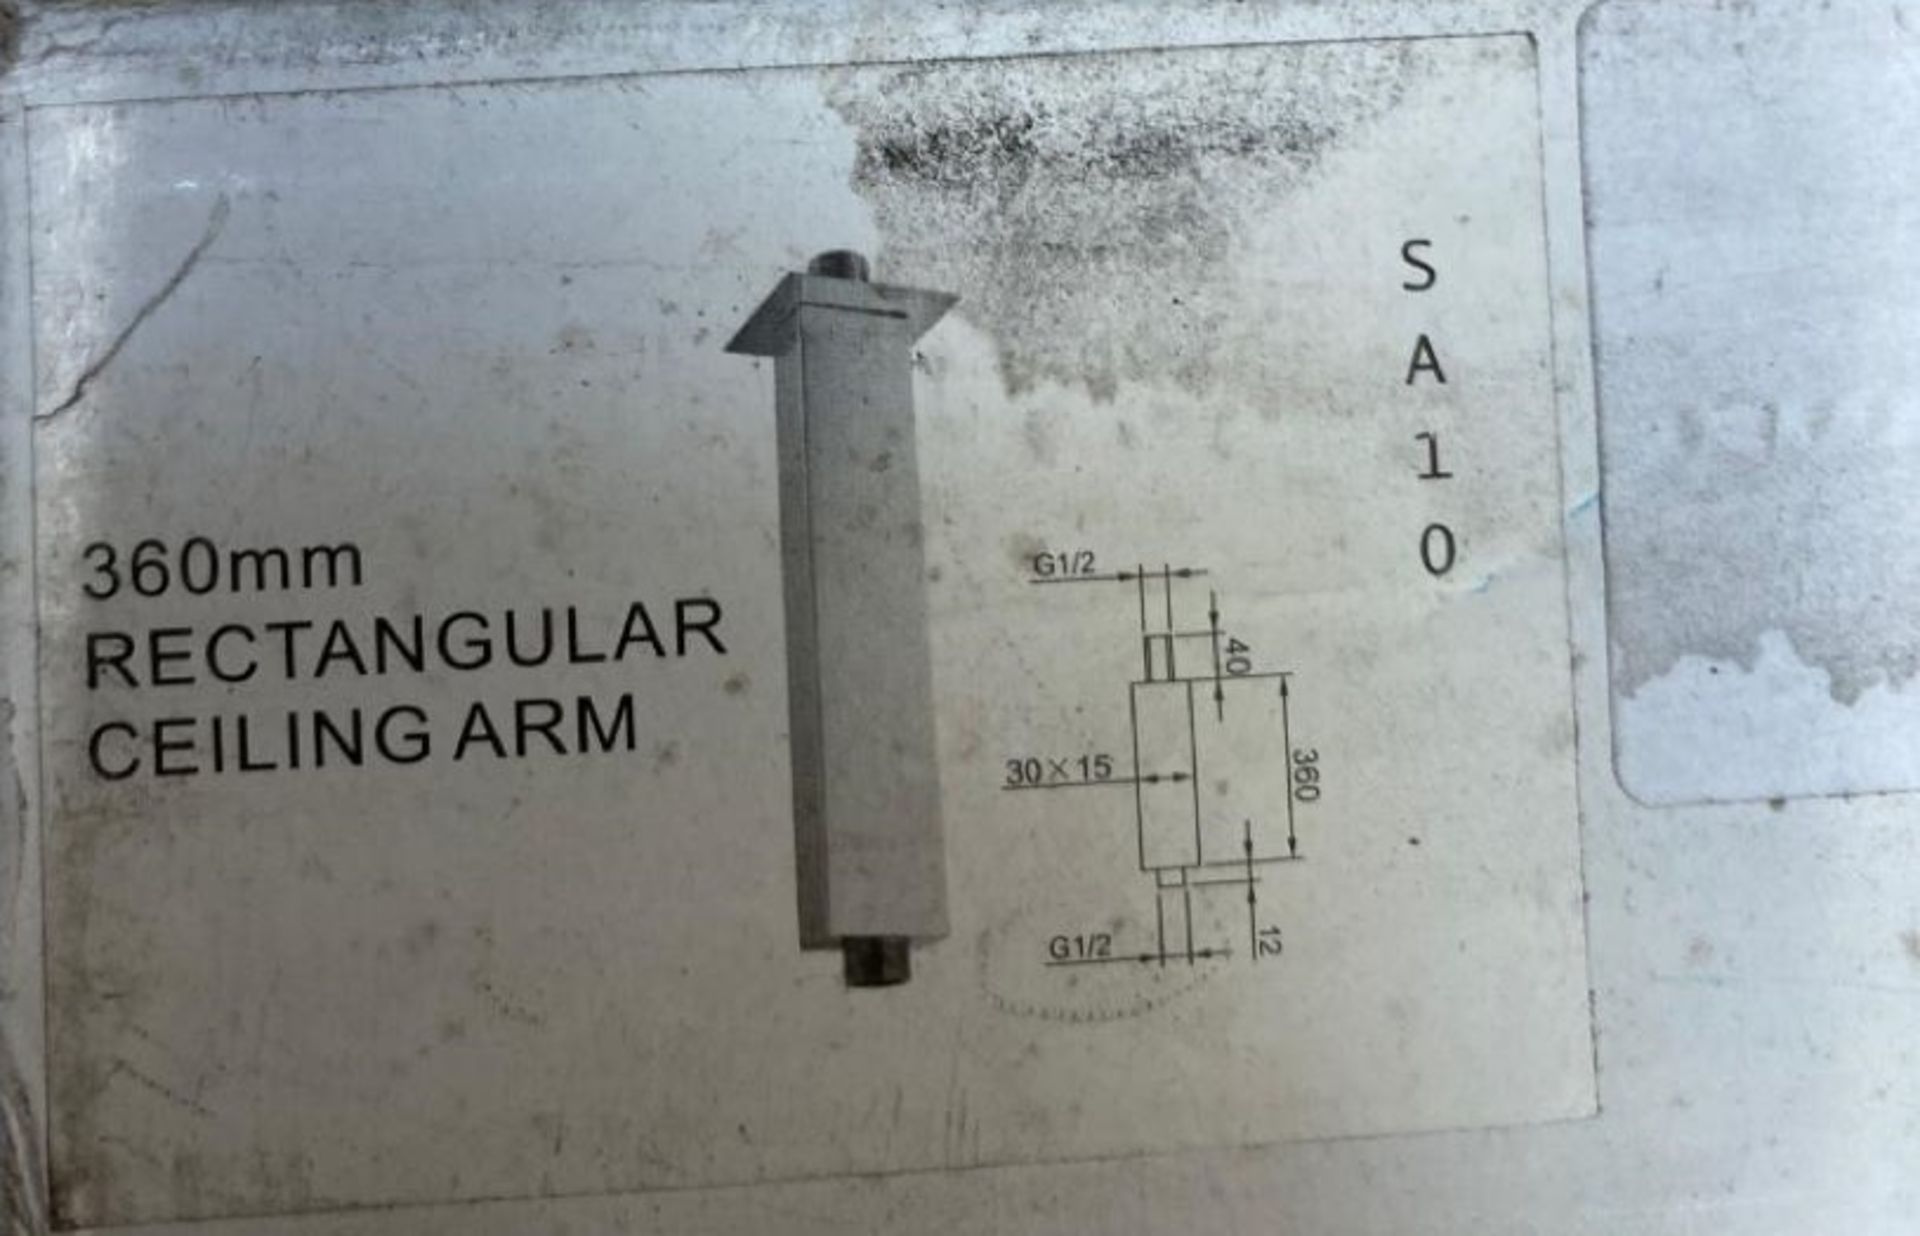 1 x 360mm Rectangular Ceiling Shower Arm - Code: SA10 - New Stock - Location: Altrincham WA14 - - Image 2 of 3